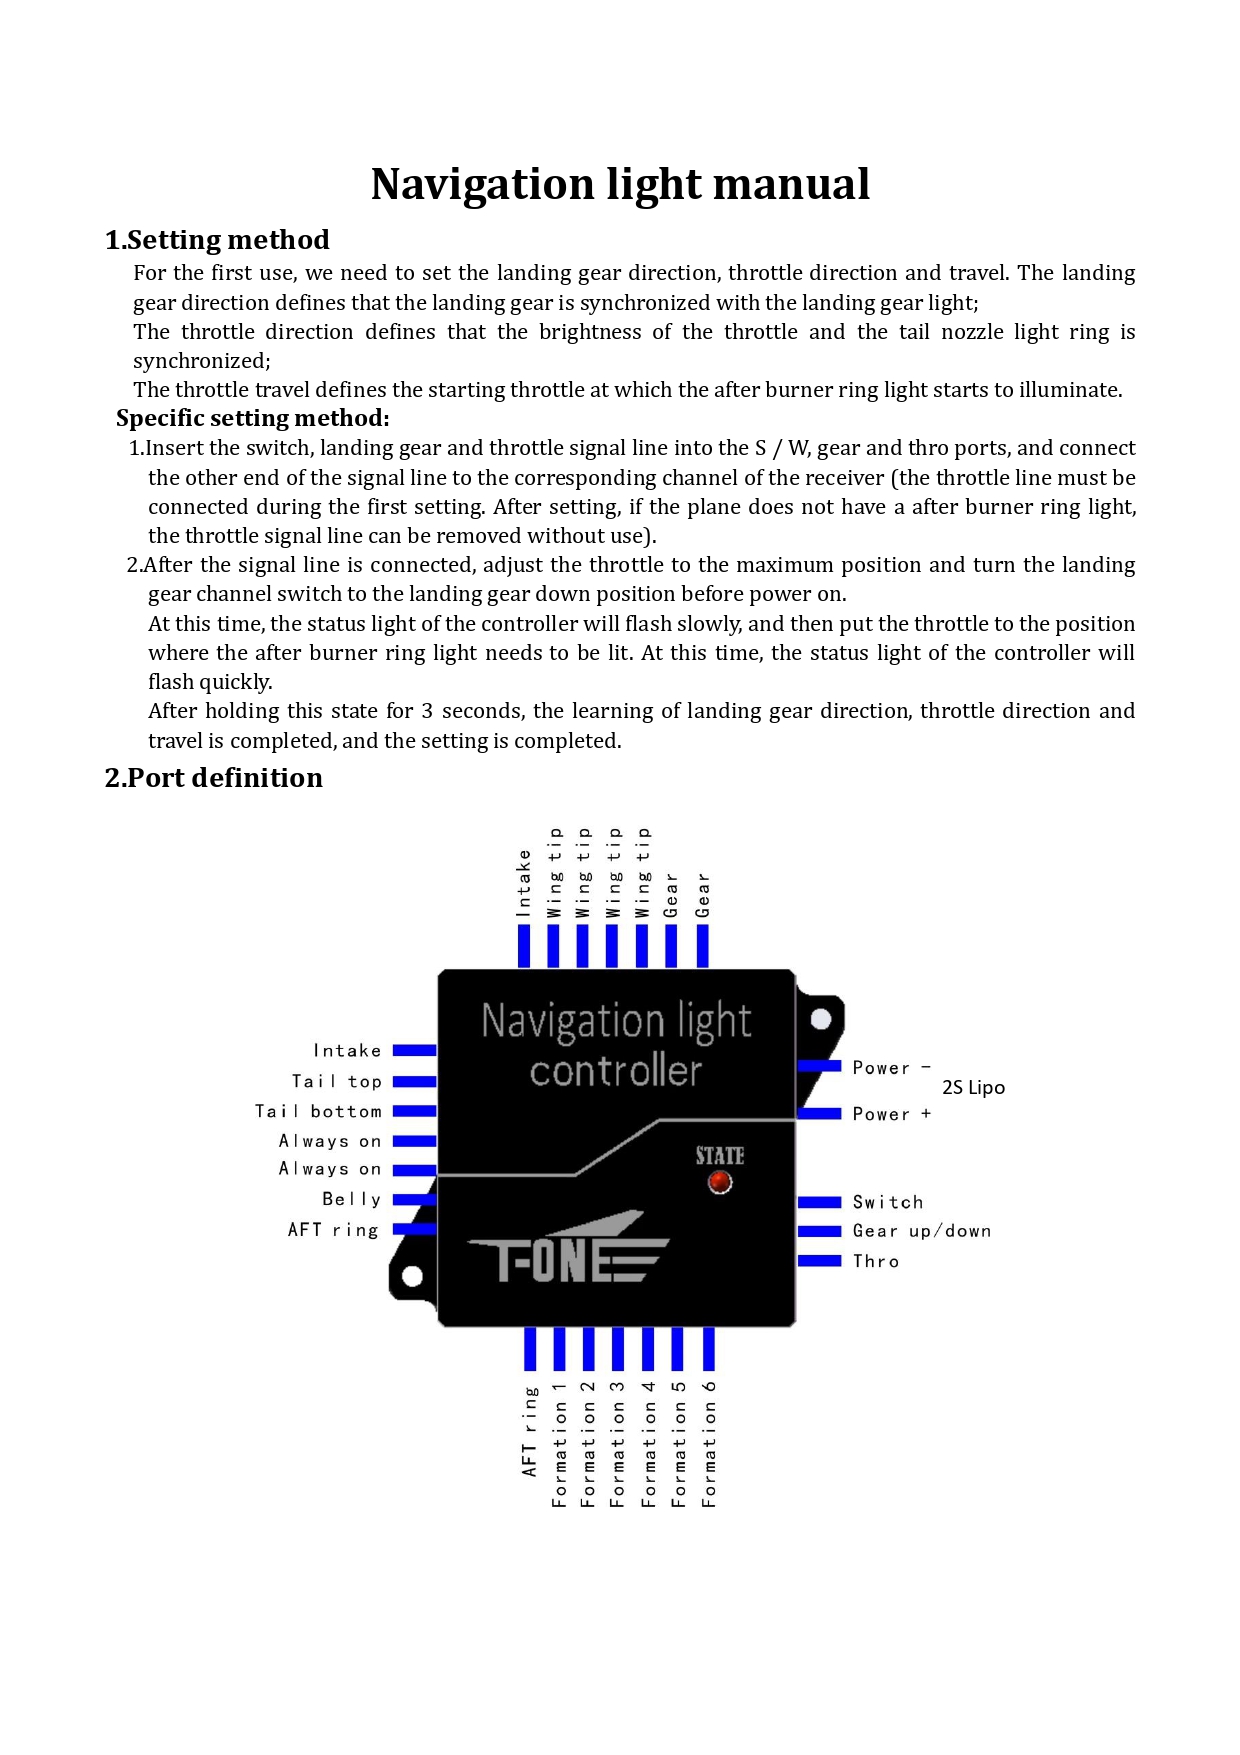 Navigation light manual_page-0001.jpg